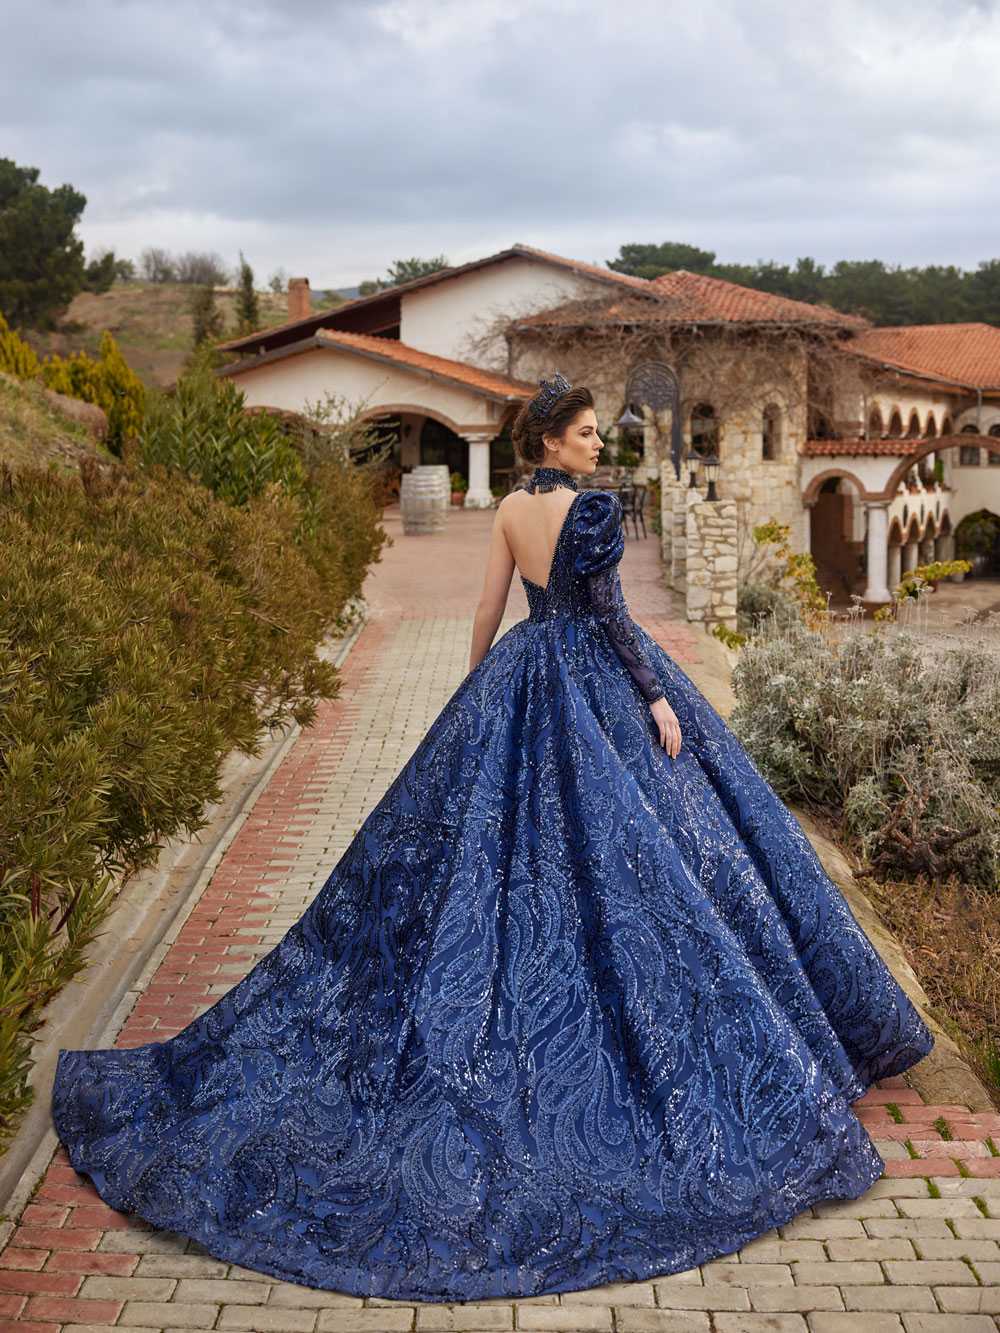 Strapless Ball Gown Wedding Dress With Textured Organza Floral Petal Skirt  | Kleinfeld Bridal